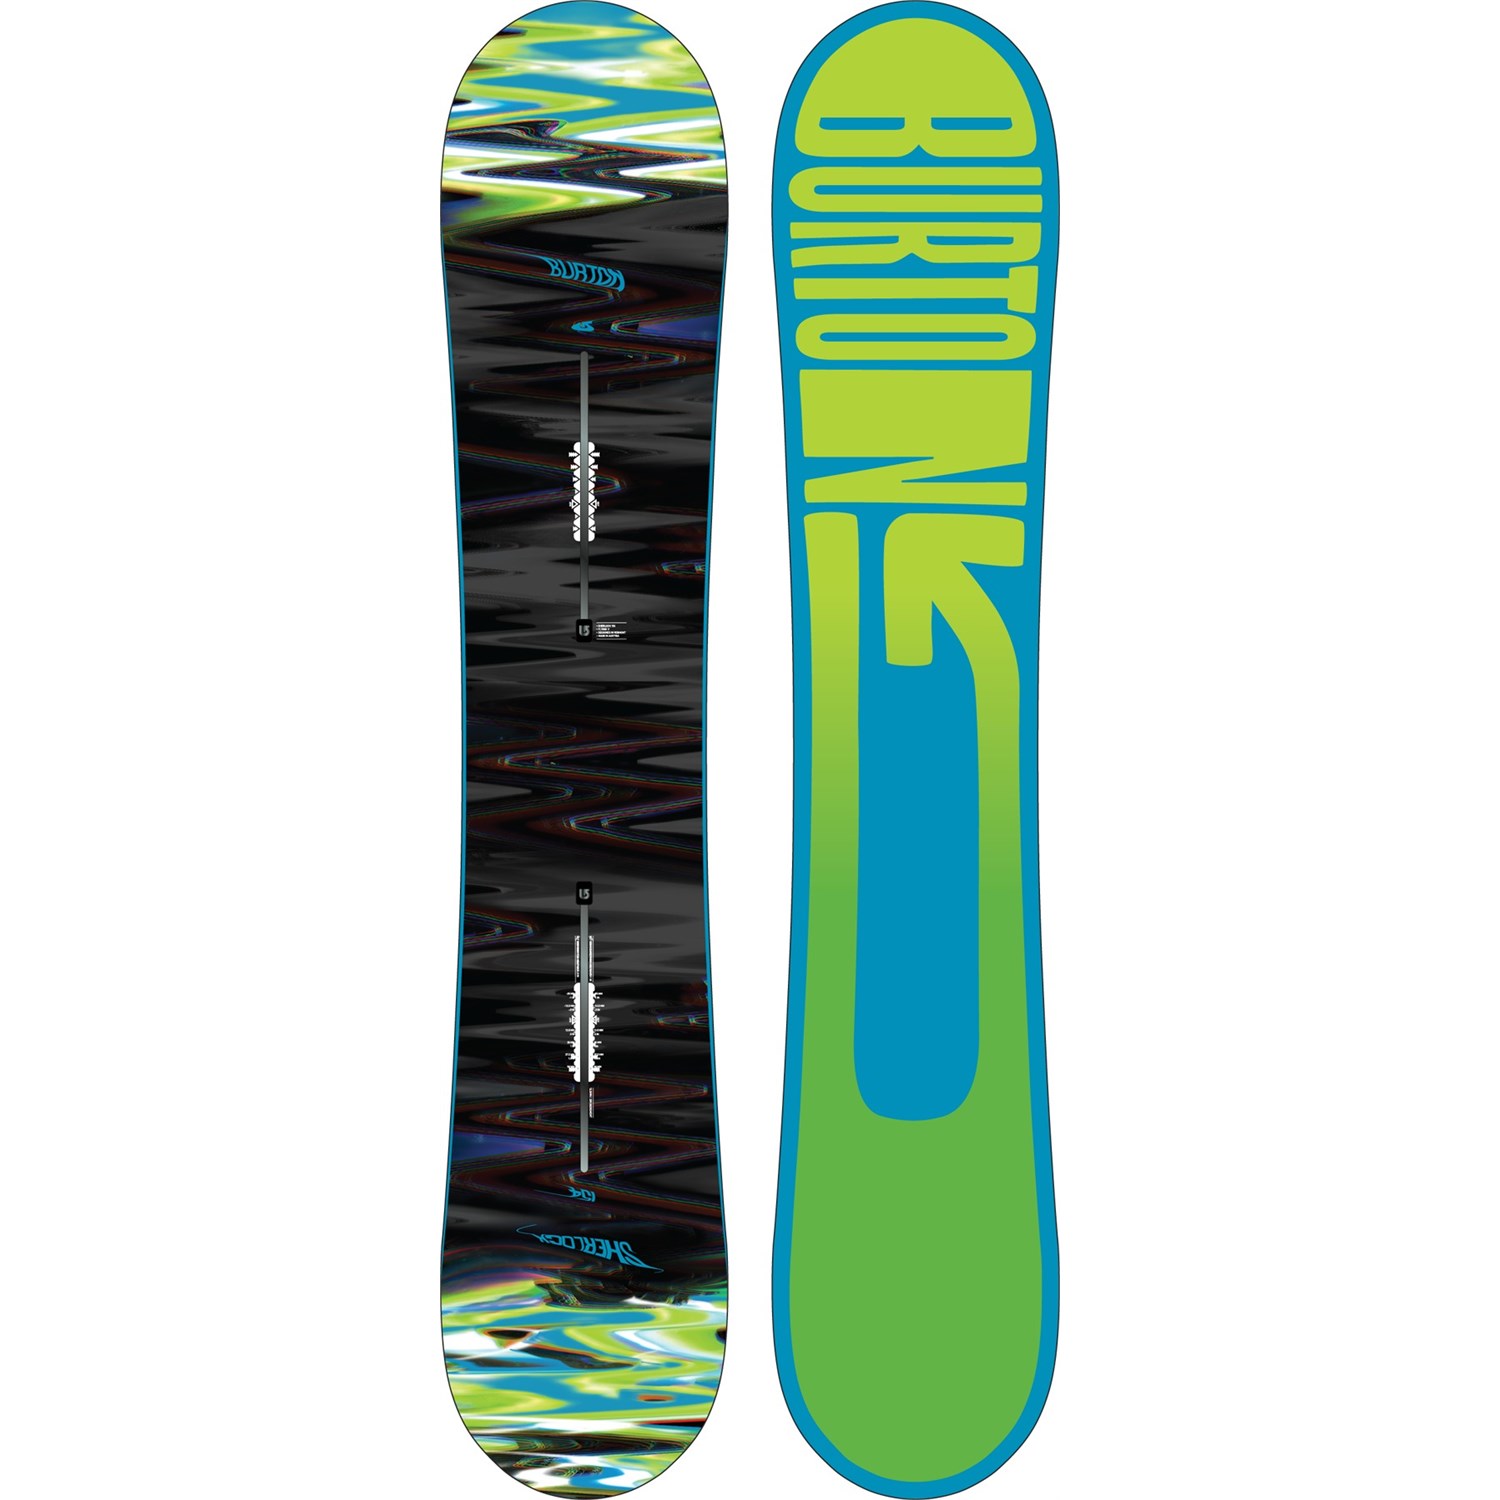 Ellendig Modieus Schaar Burton Sherlock Snowboard 2014 | evo